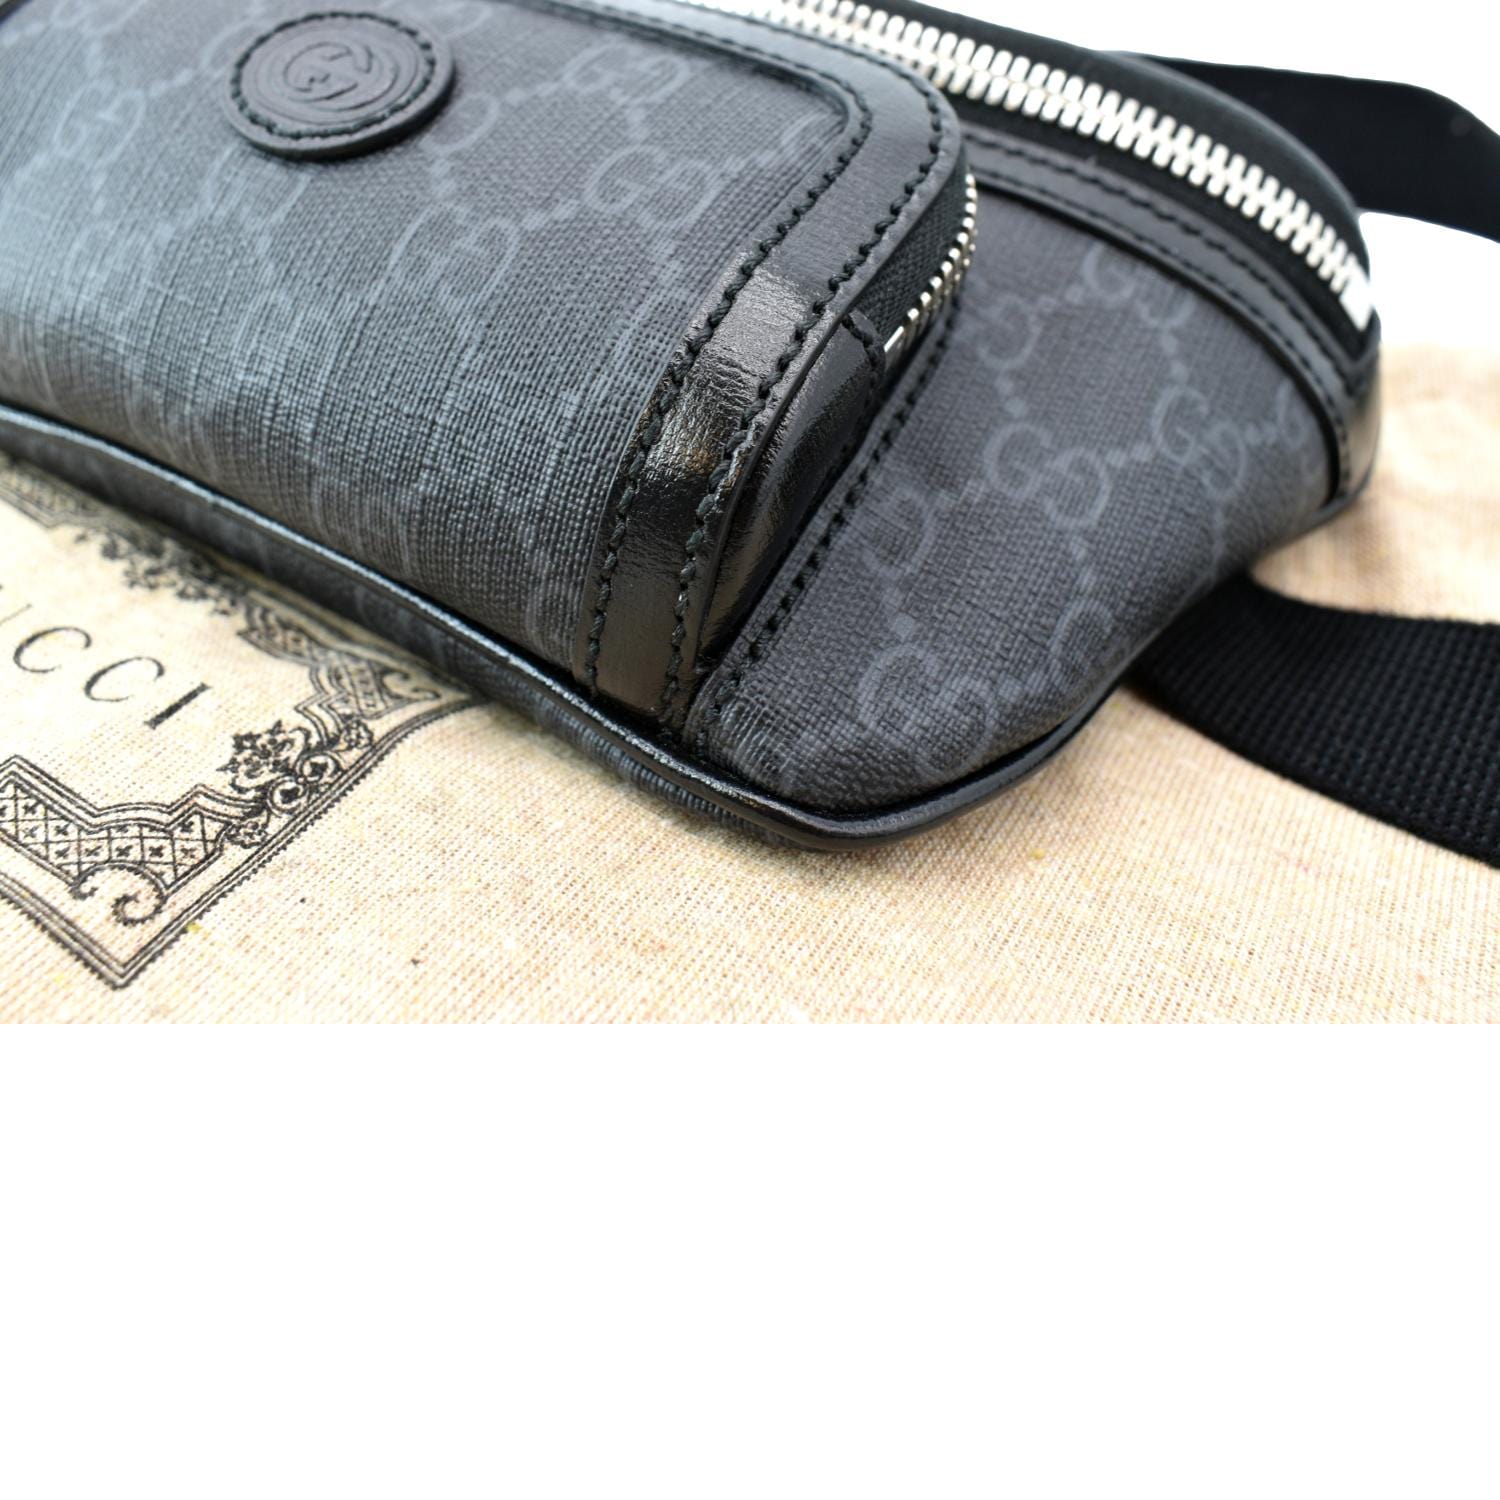 Gucci Wallet with Interlocking G, Black, GG Canvas